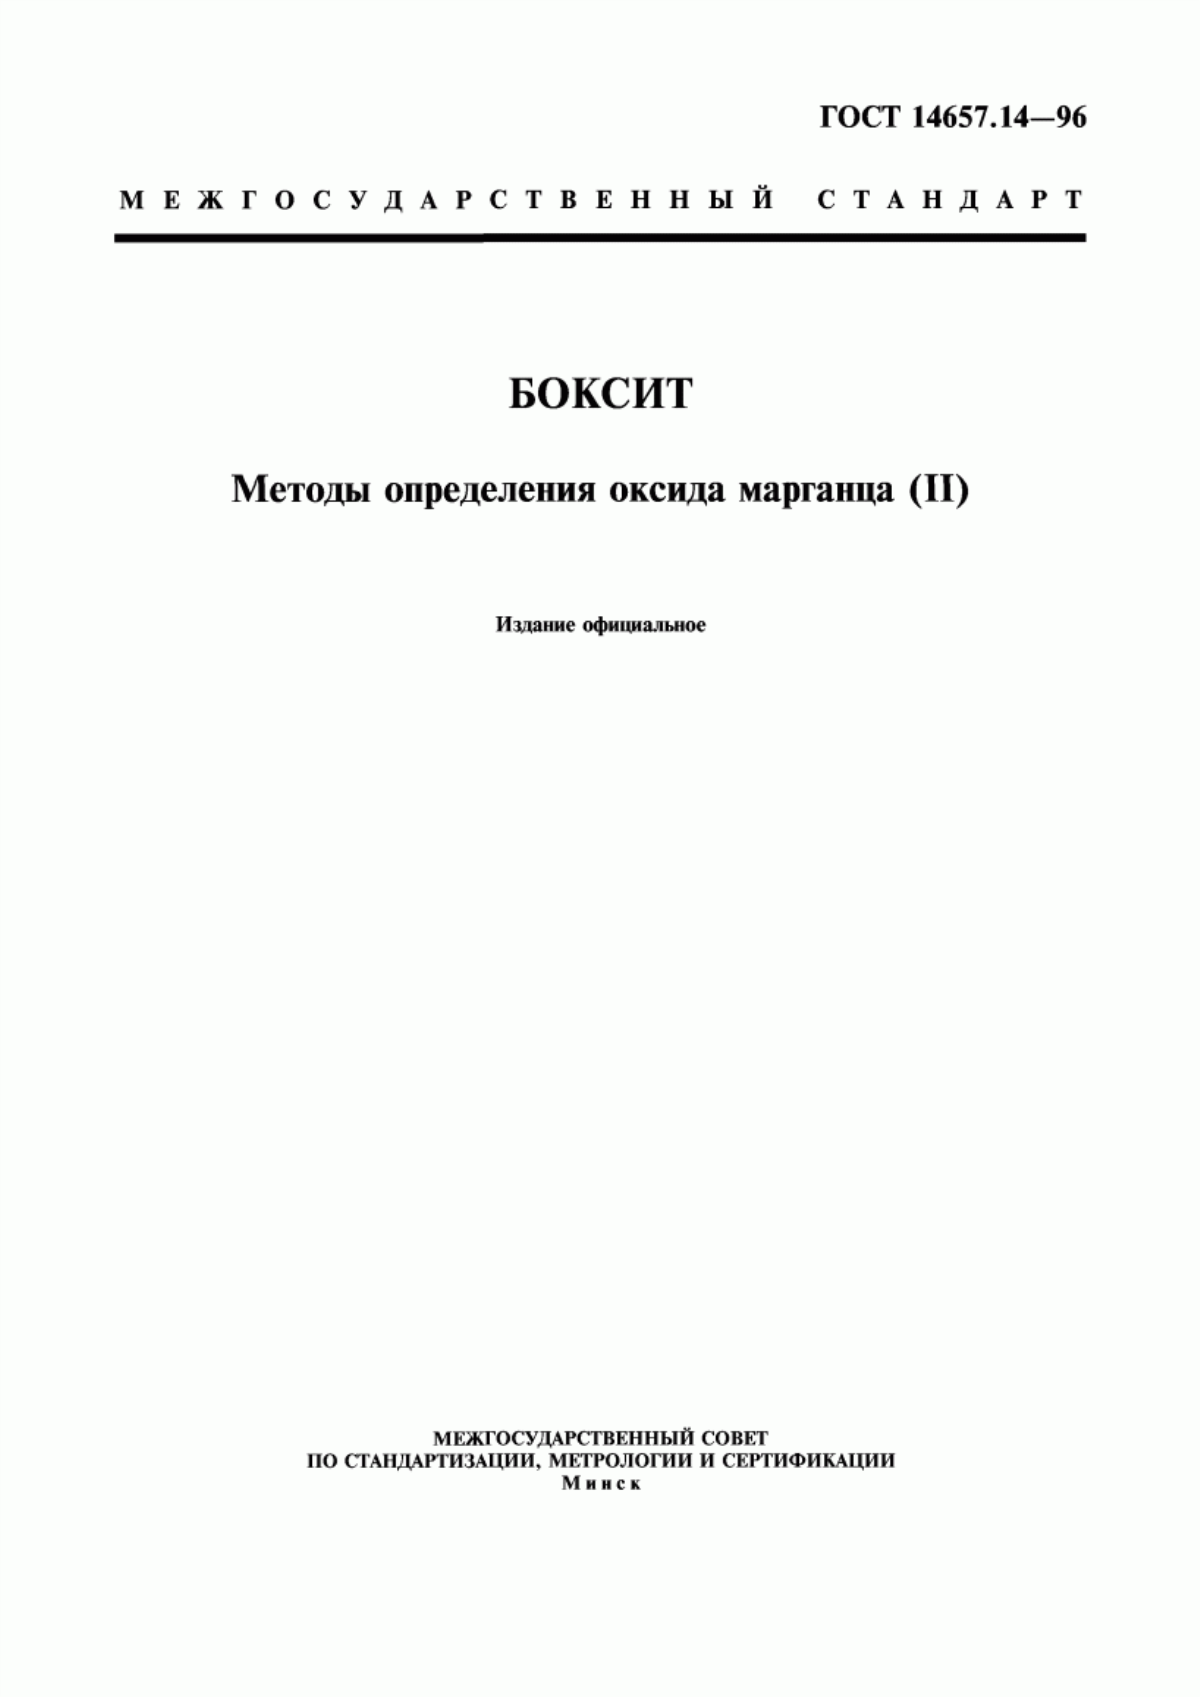 ГОСТ 14657.14-96 Боксит. Методы определения оксида марганца (II)